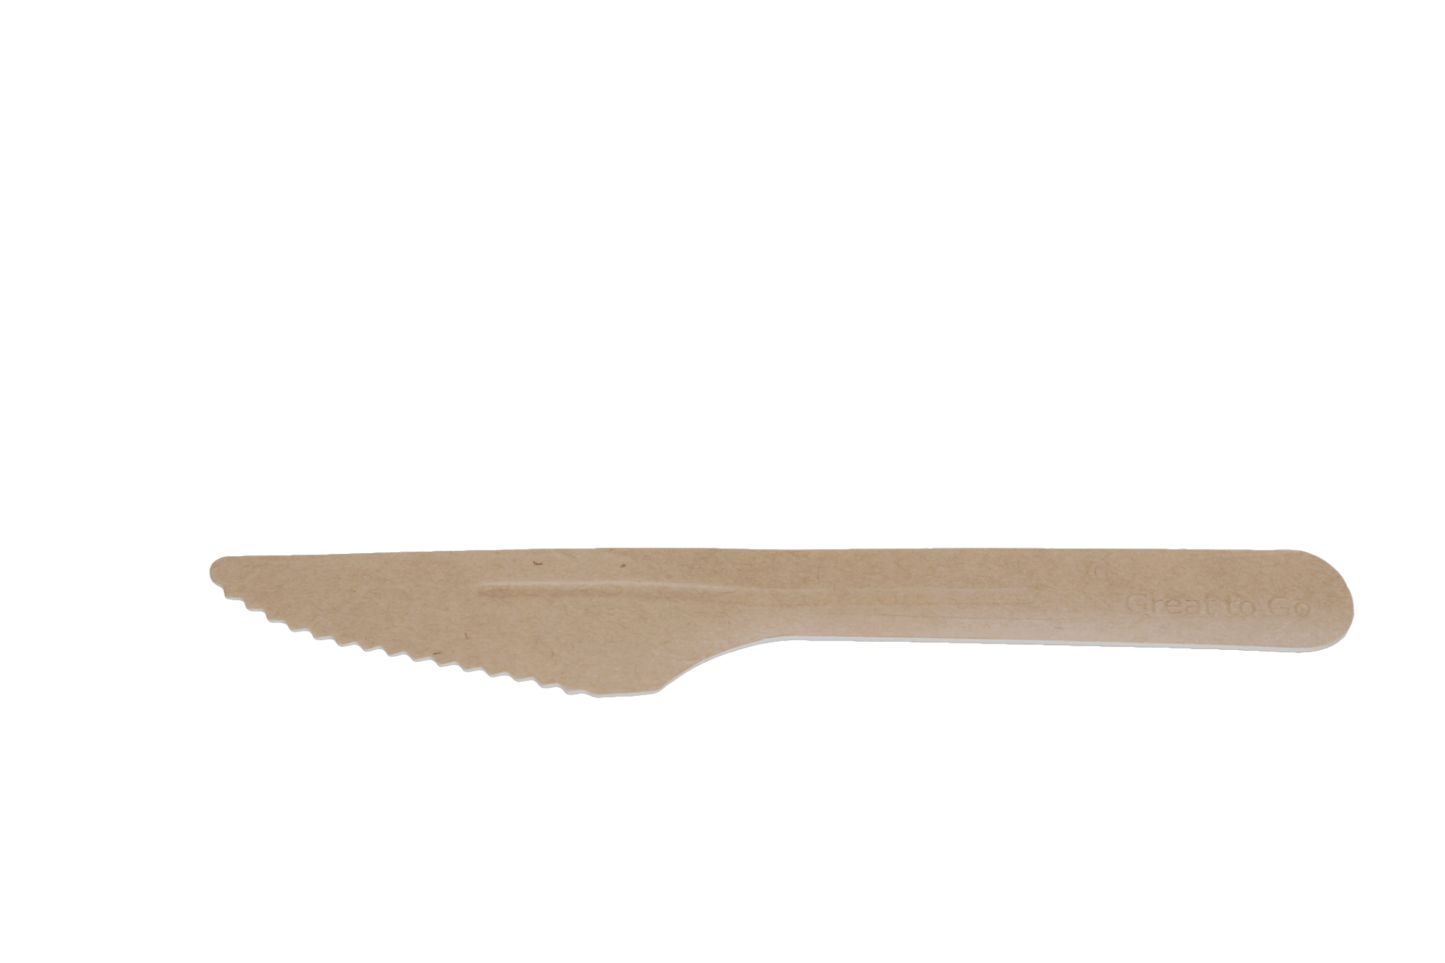 Cardboard knife 165mm BIO